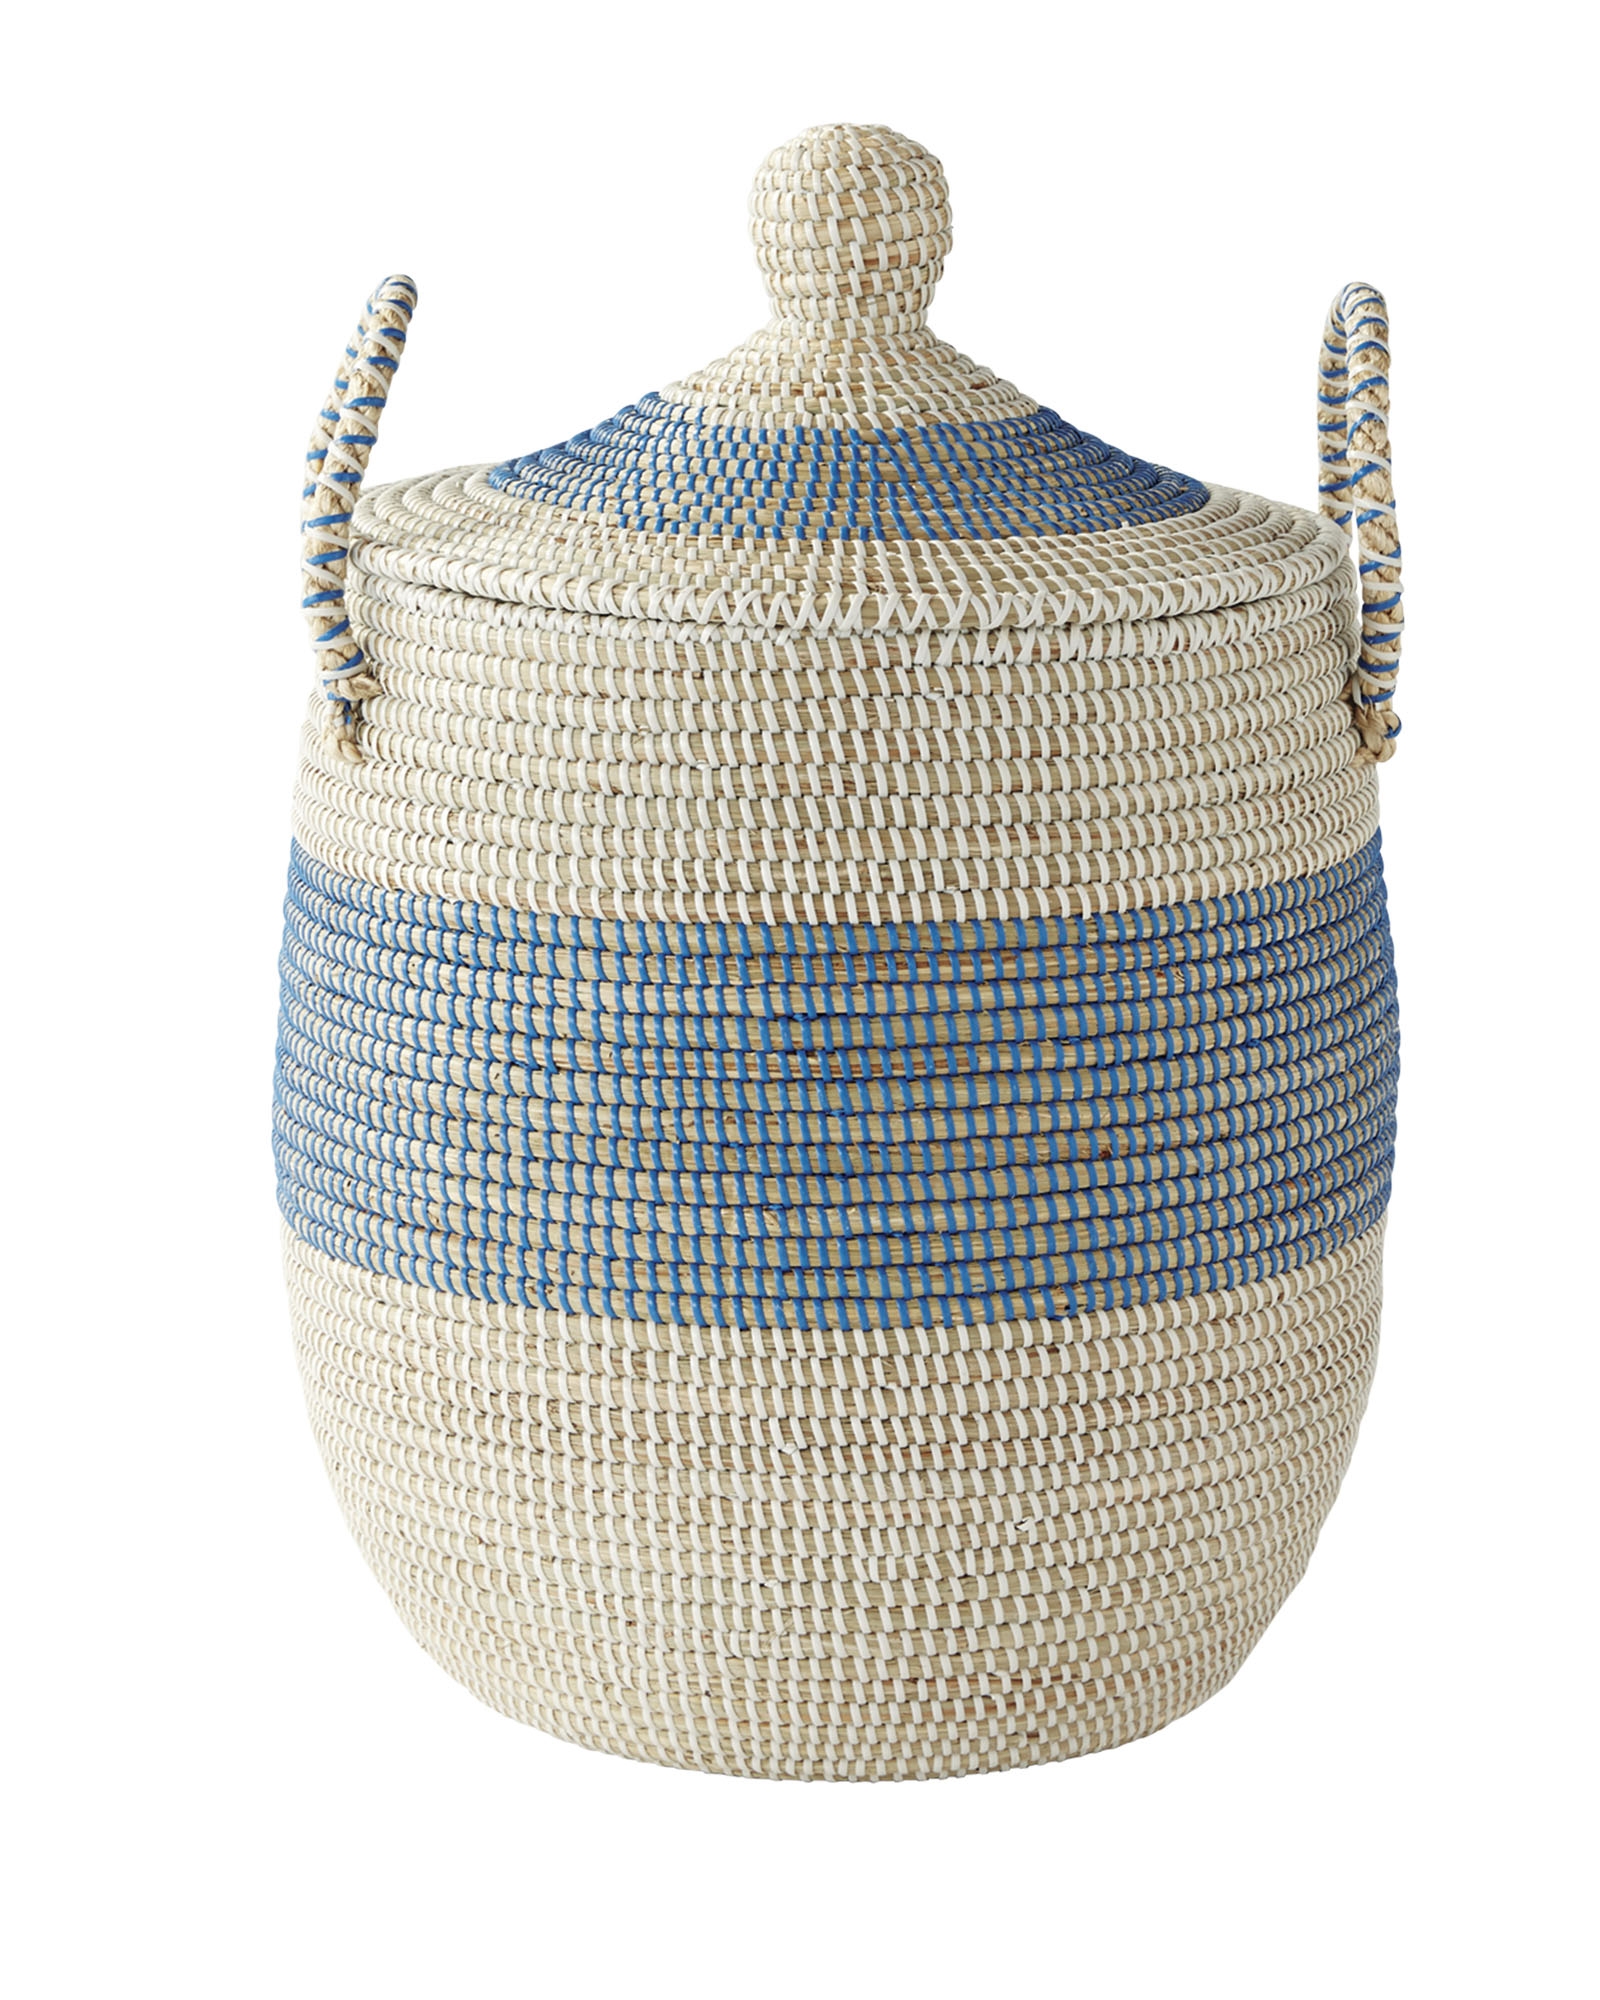 La Jolla Basket - Blue Small - Image 0